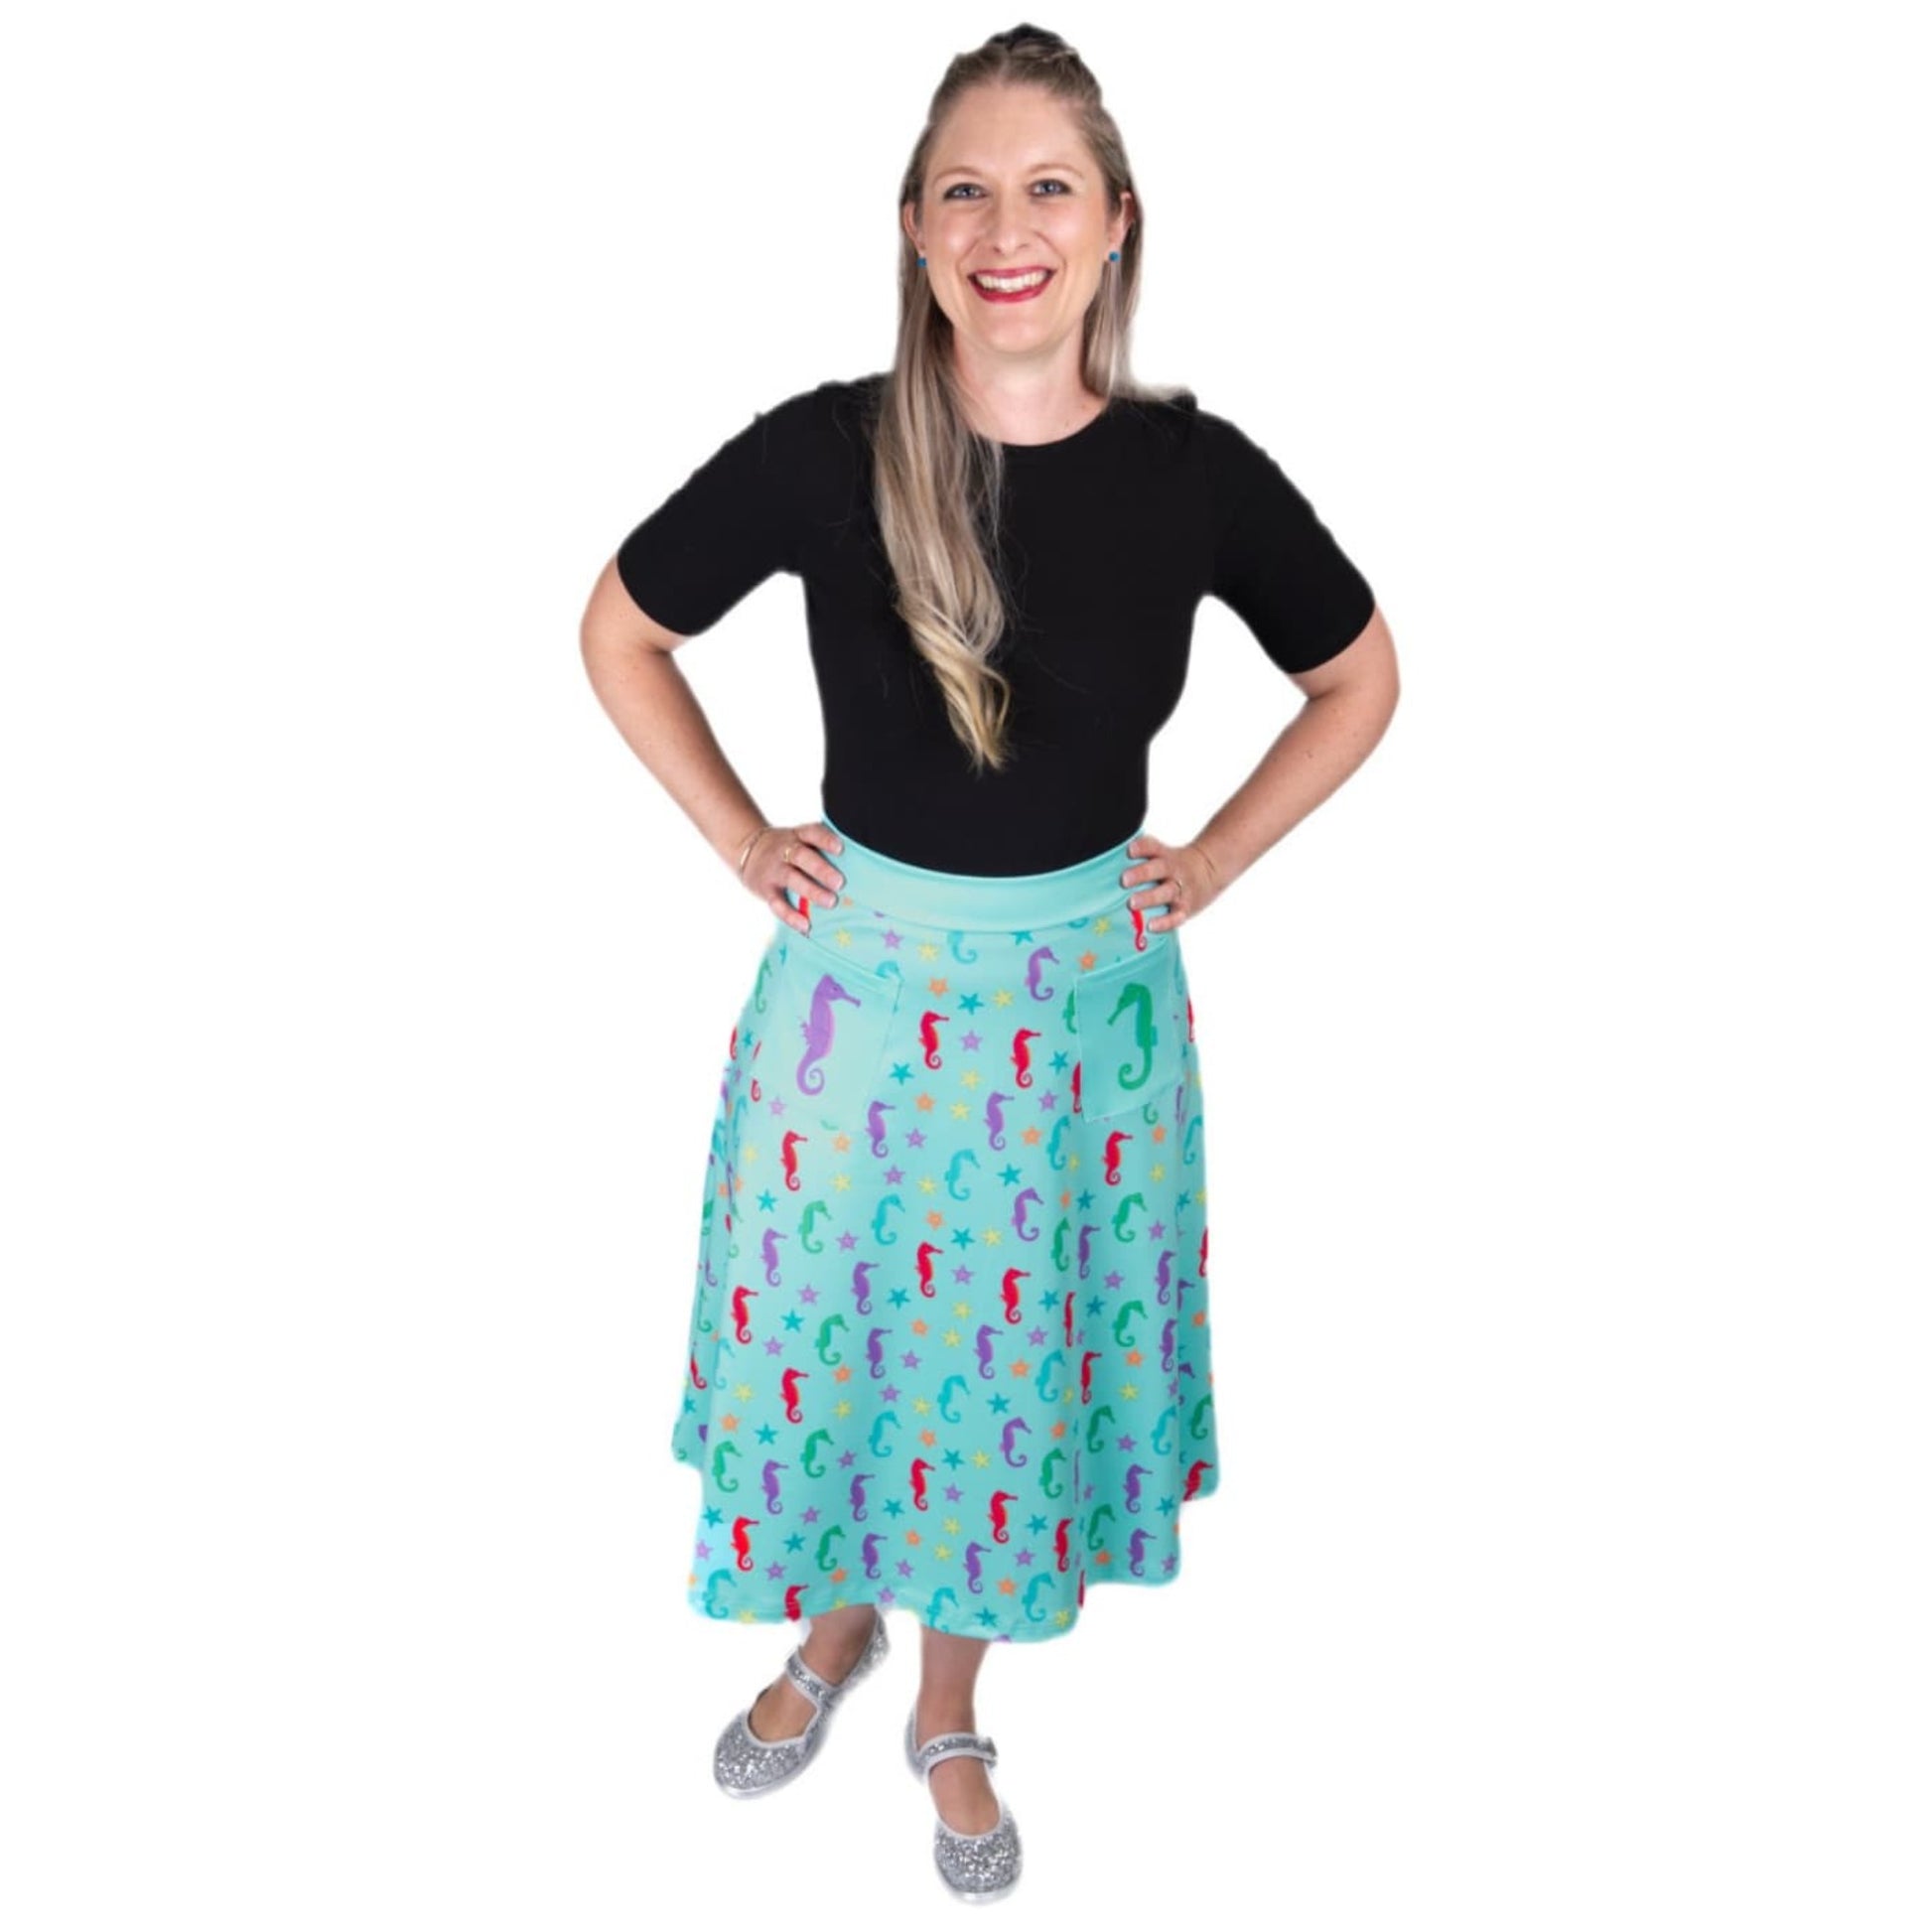 Oceania Original Skirt by RainbowsAndFairies.com.au (Seahorse - Starfish - Under The Sea - Kitsch - Aline Skirt With Pockets - Vintage Inspired) - SKU: CL_OSKRT_OCEAN_ORG - Pic-03